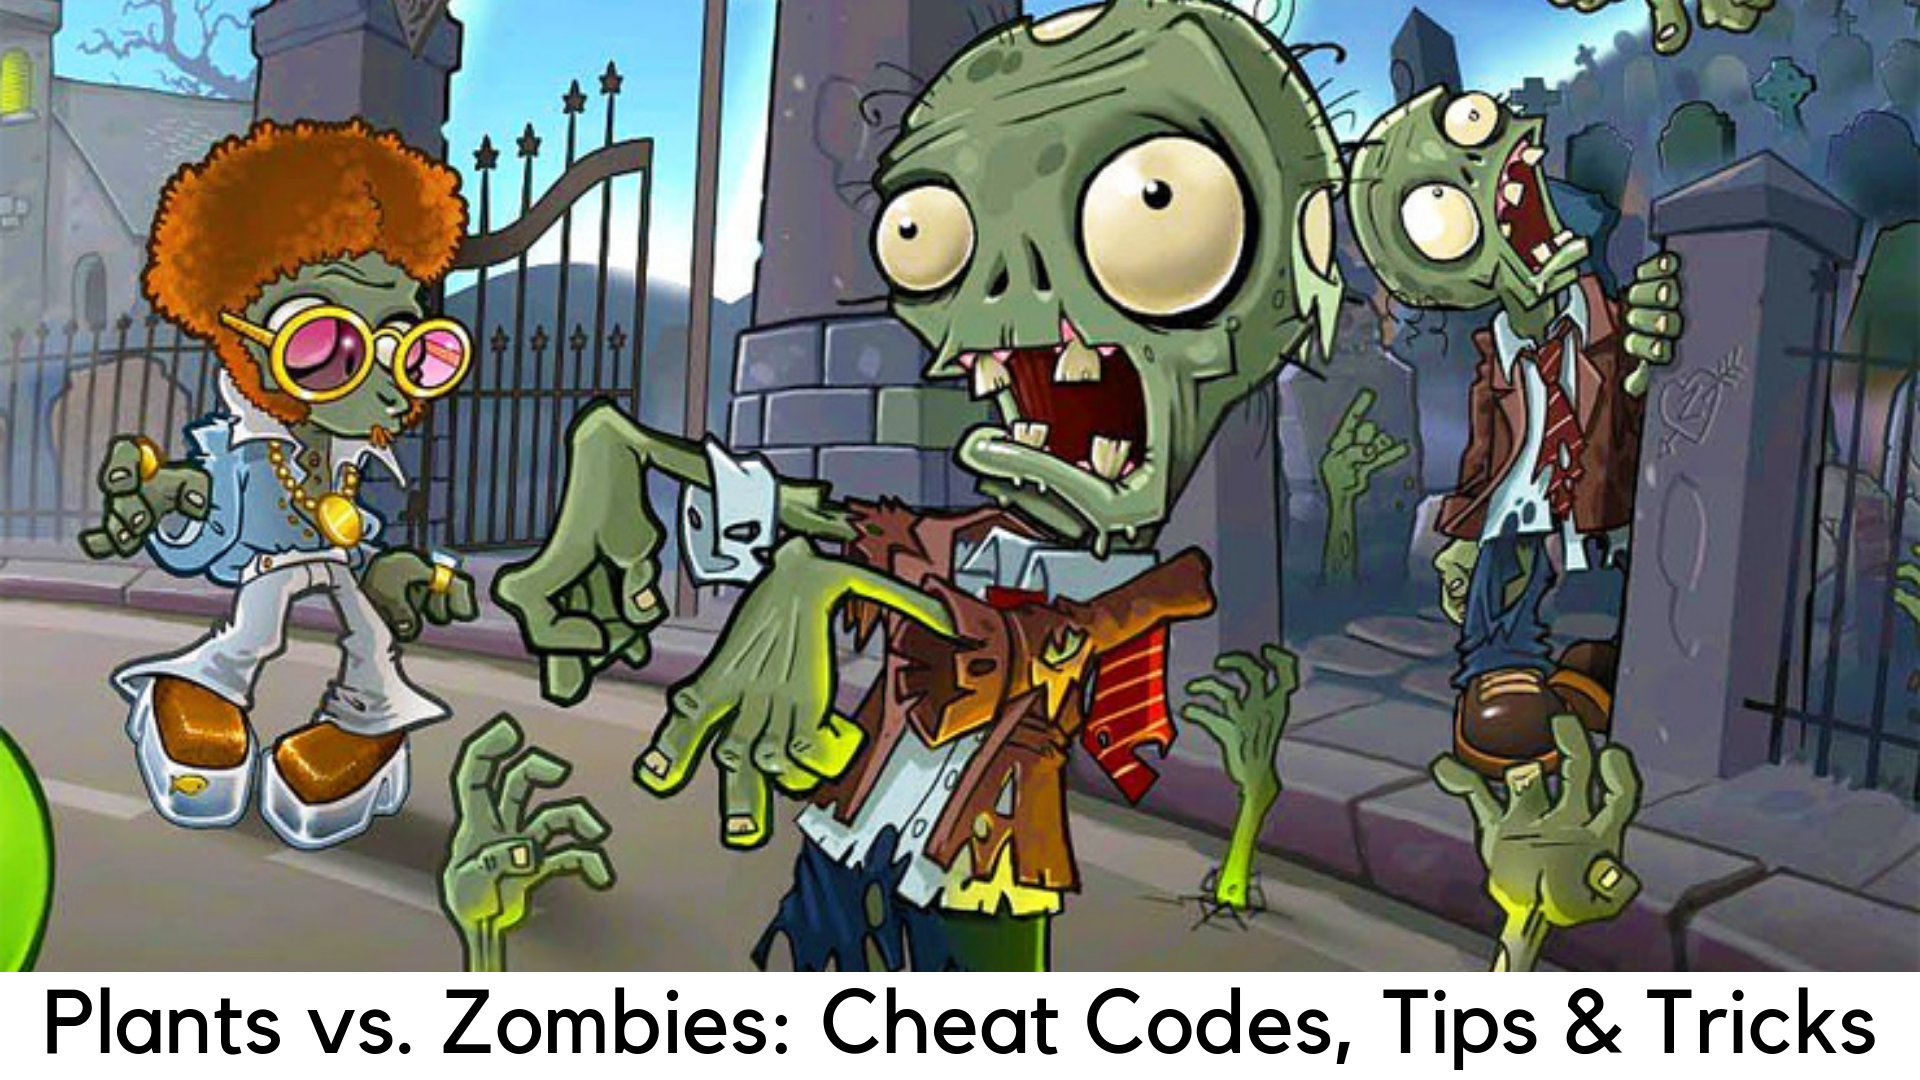 Plants vs zombies cheats. Plants vs Zombies игра за зомби. Растения против зомби мультик. Растения против зомби Зомбатар. Растения против зомби подтанцовщик.